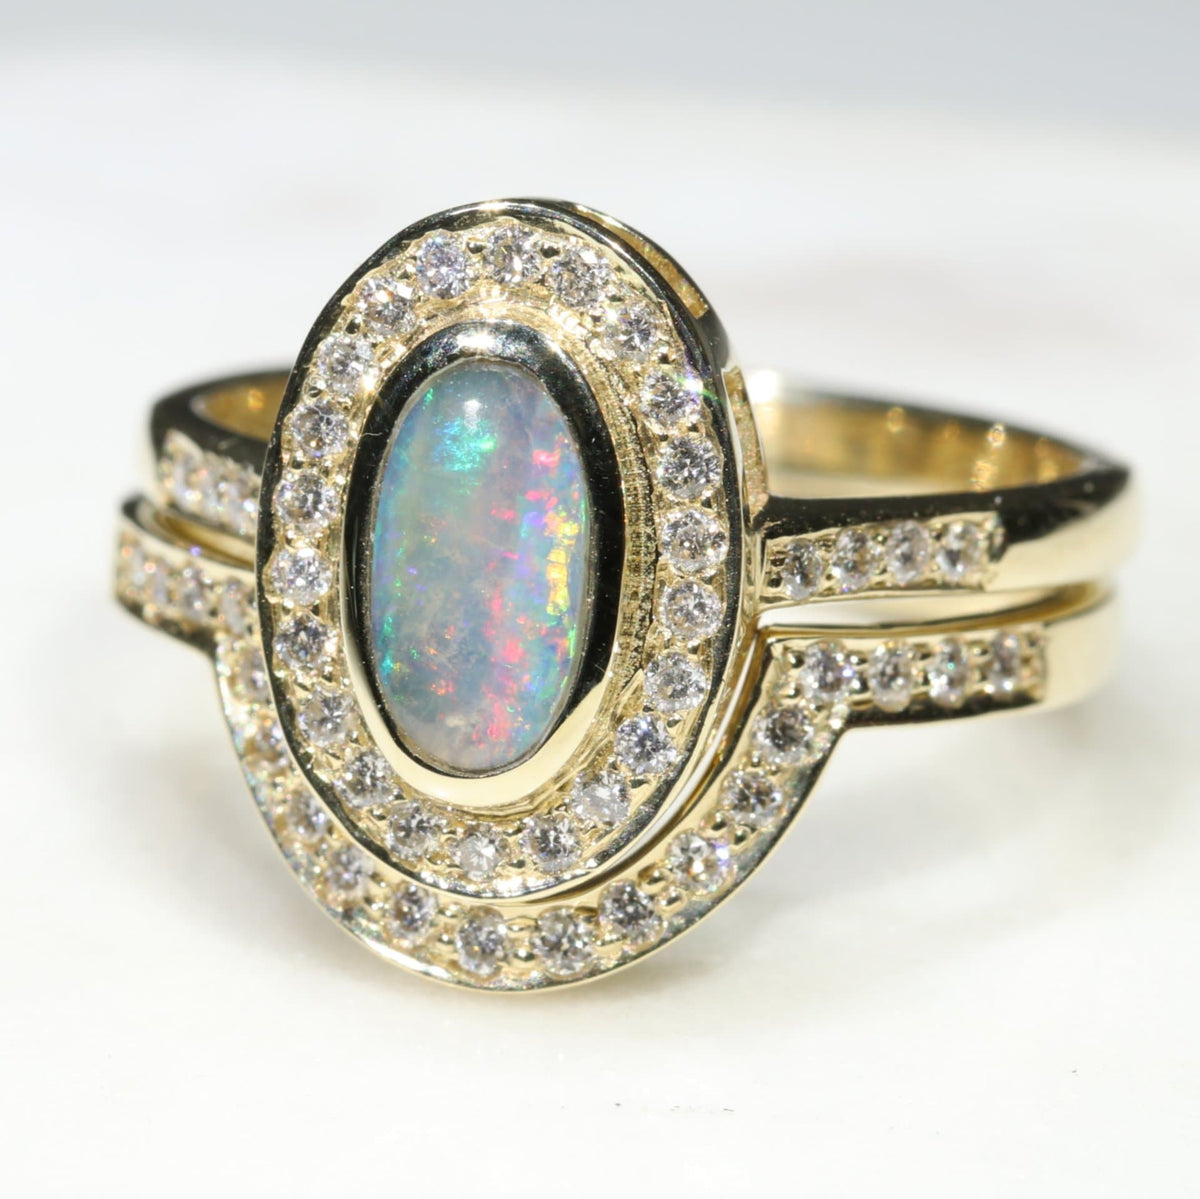 Australian Opal Engagement and Wedding Ring Set